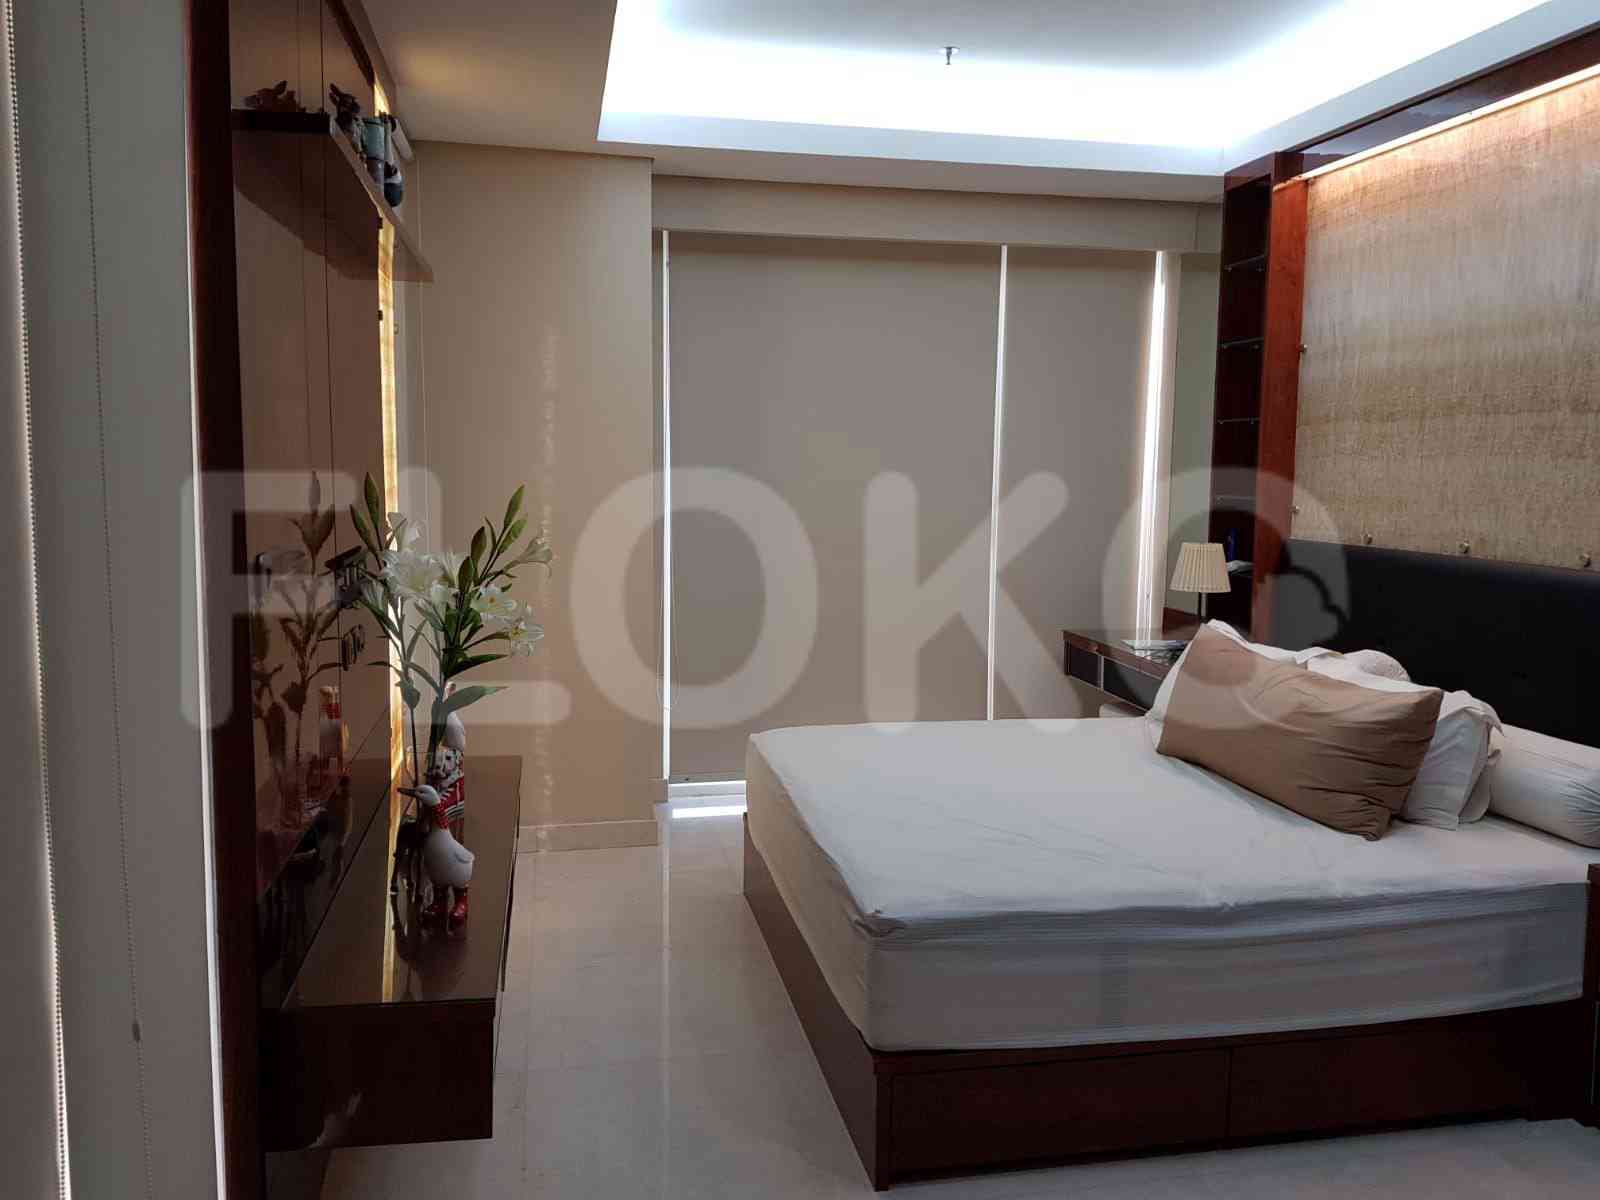 1 Bedroom on 16th Floor for Rent in Pondok Indah Residence - fpo995 1